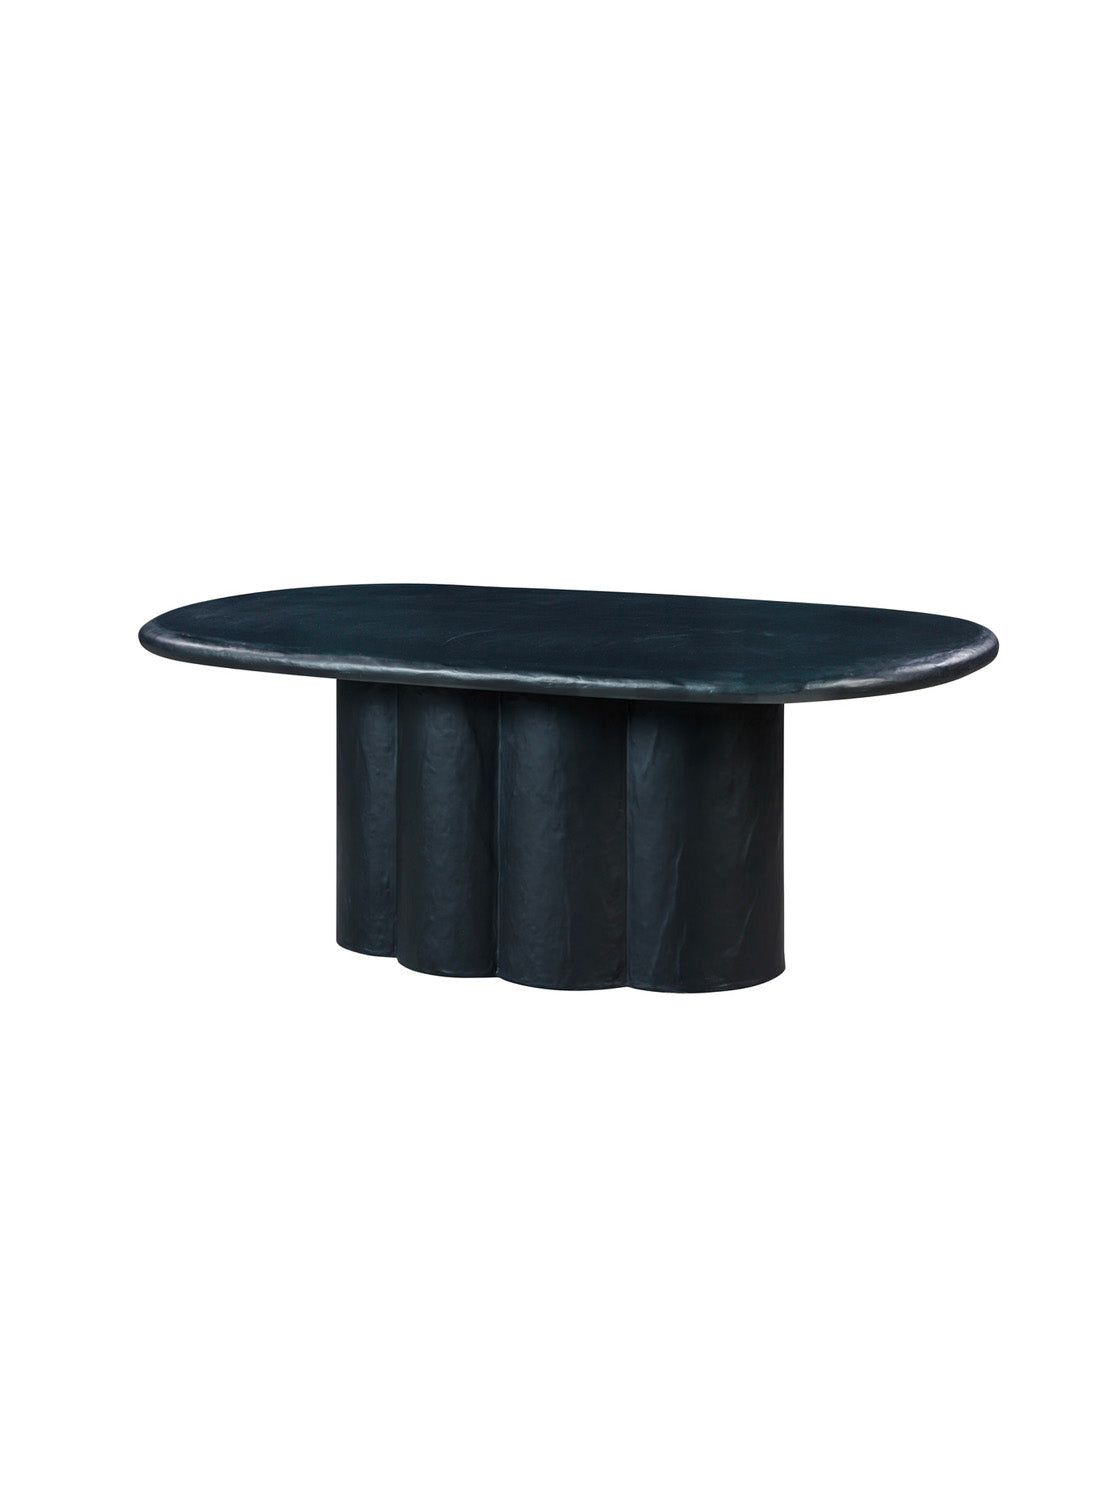 Alika Faux Plaster Oval Dining Table, Black